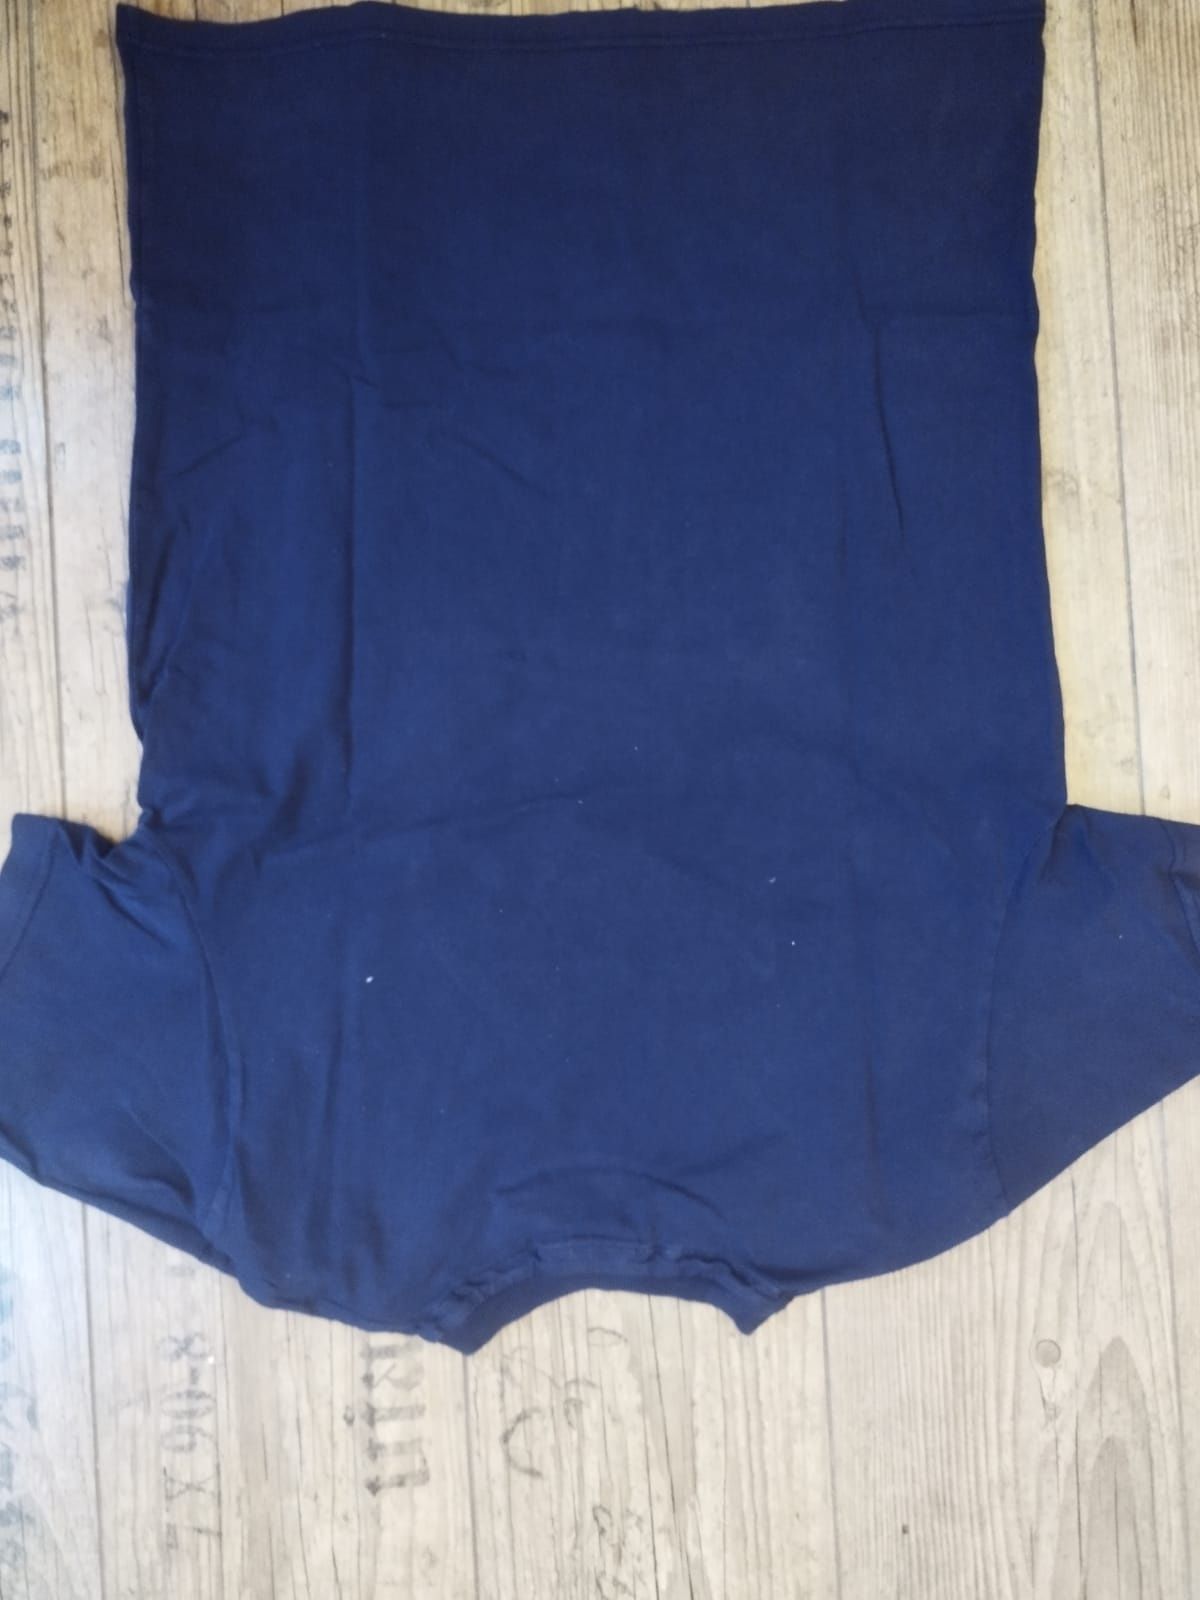 Koszulka GAP granatowa/fioletowa rozmiar XL